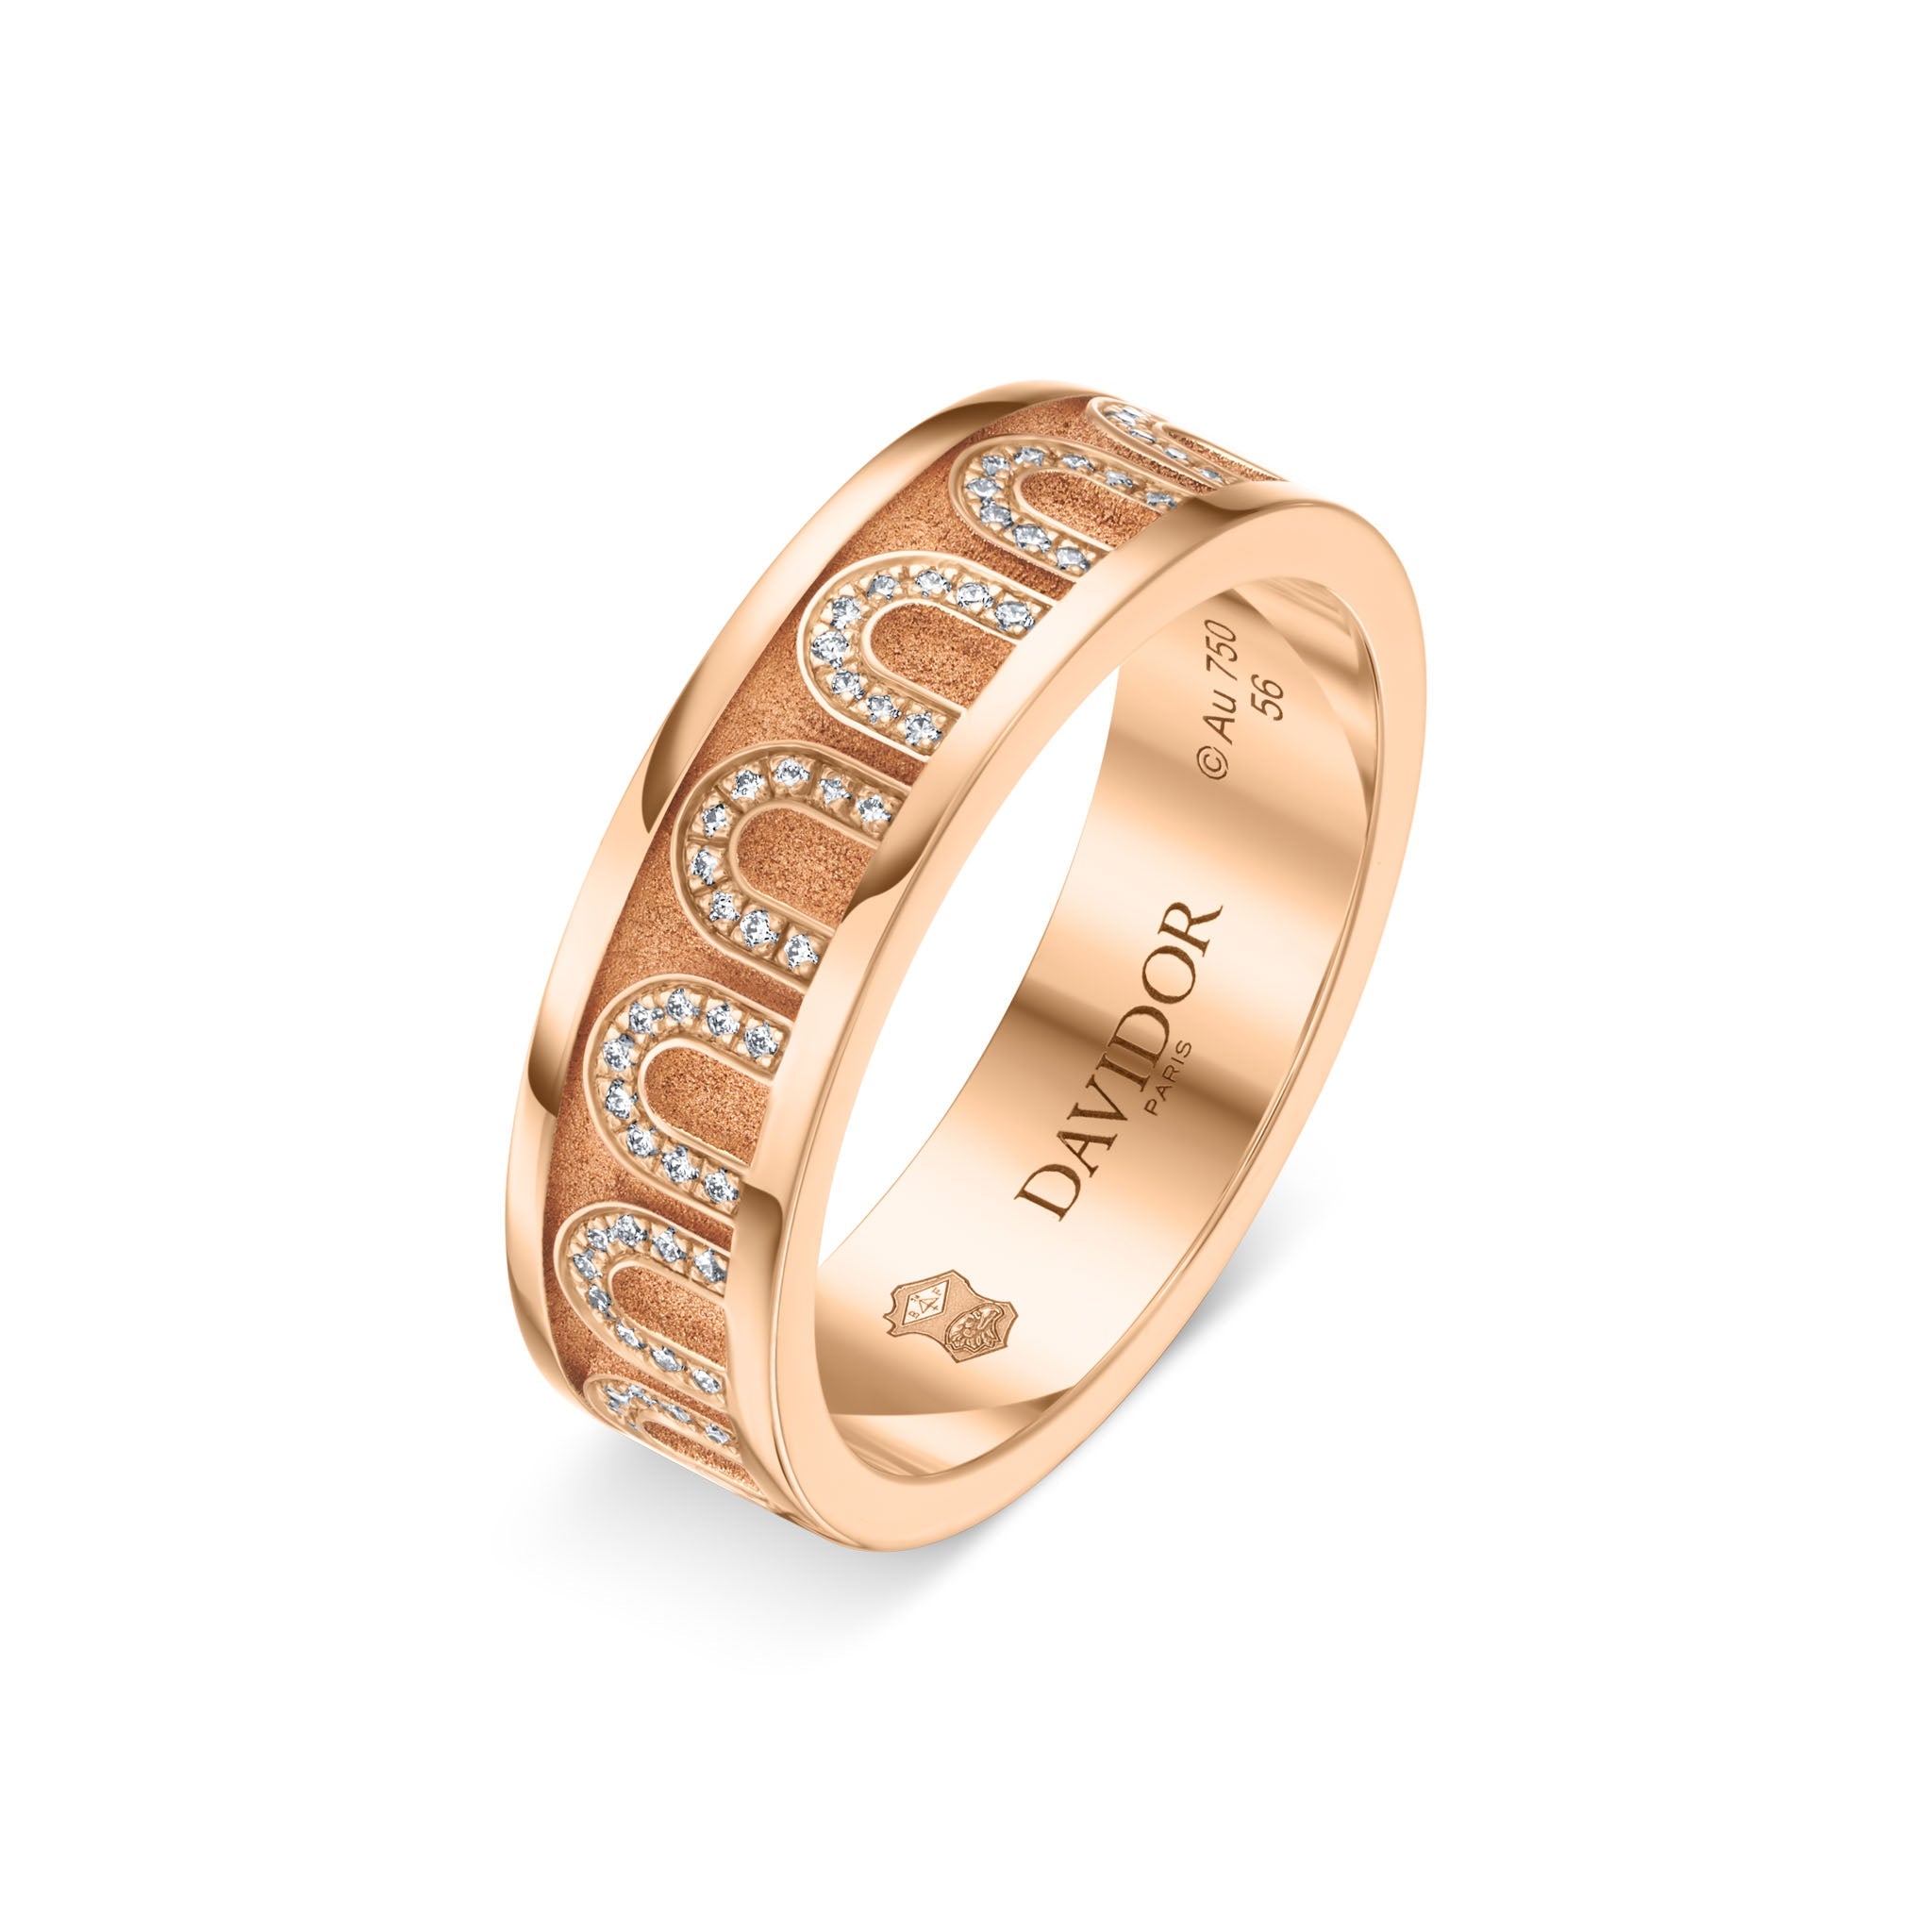 L’Arc de DAVIDOR Ring MM, 18k Rose Gold with Satin Finish and Arcade Diamonds